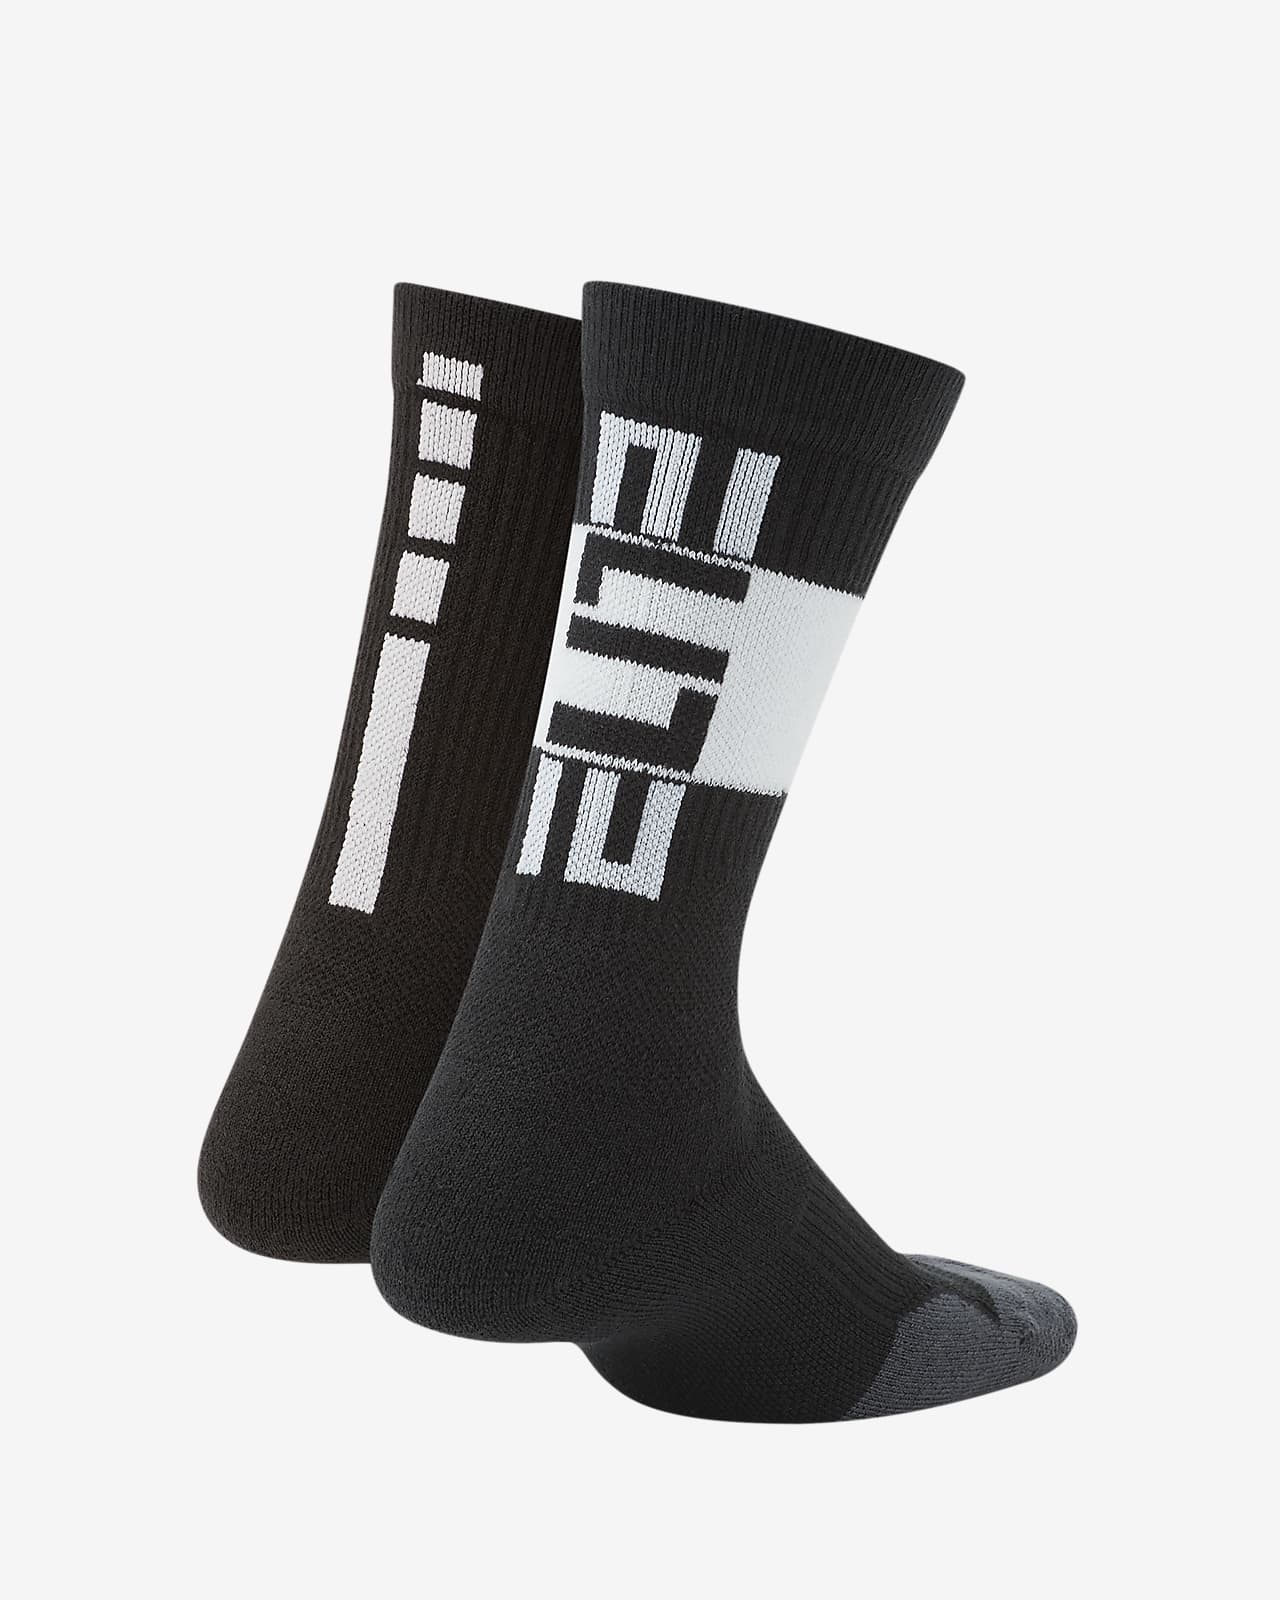 blue and white nike elite socks